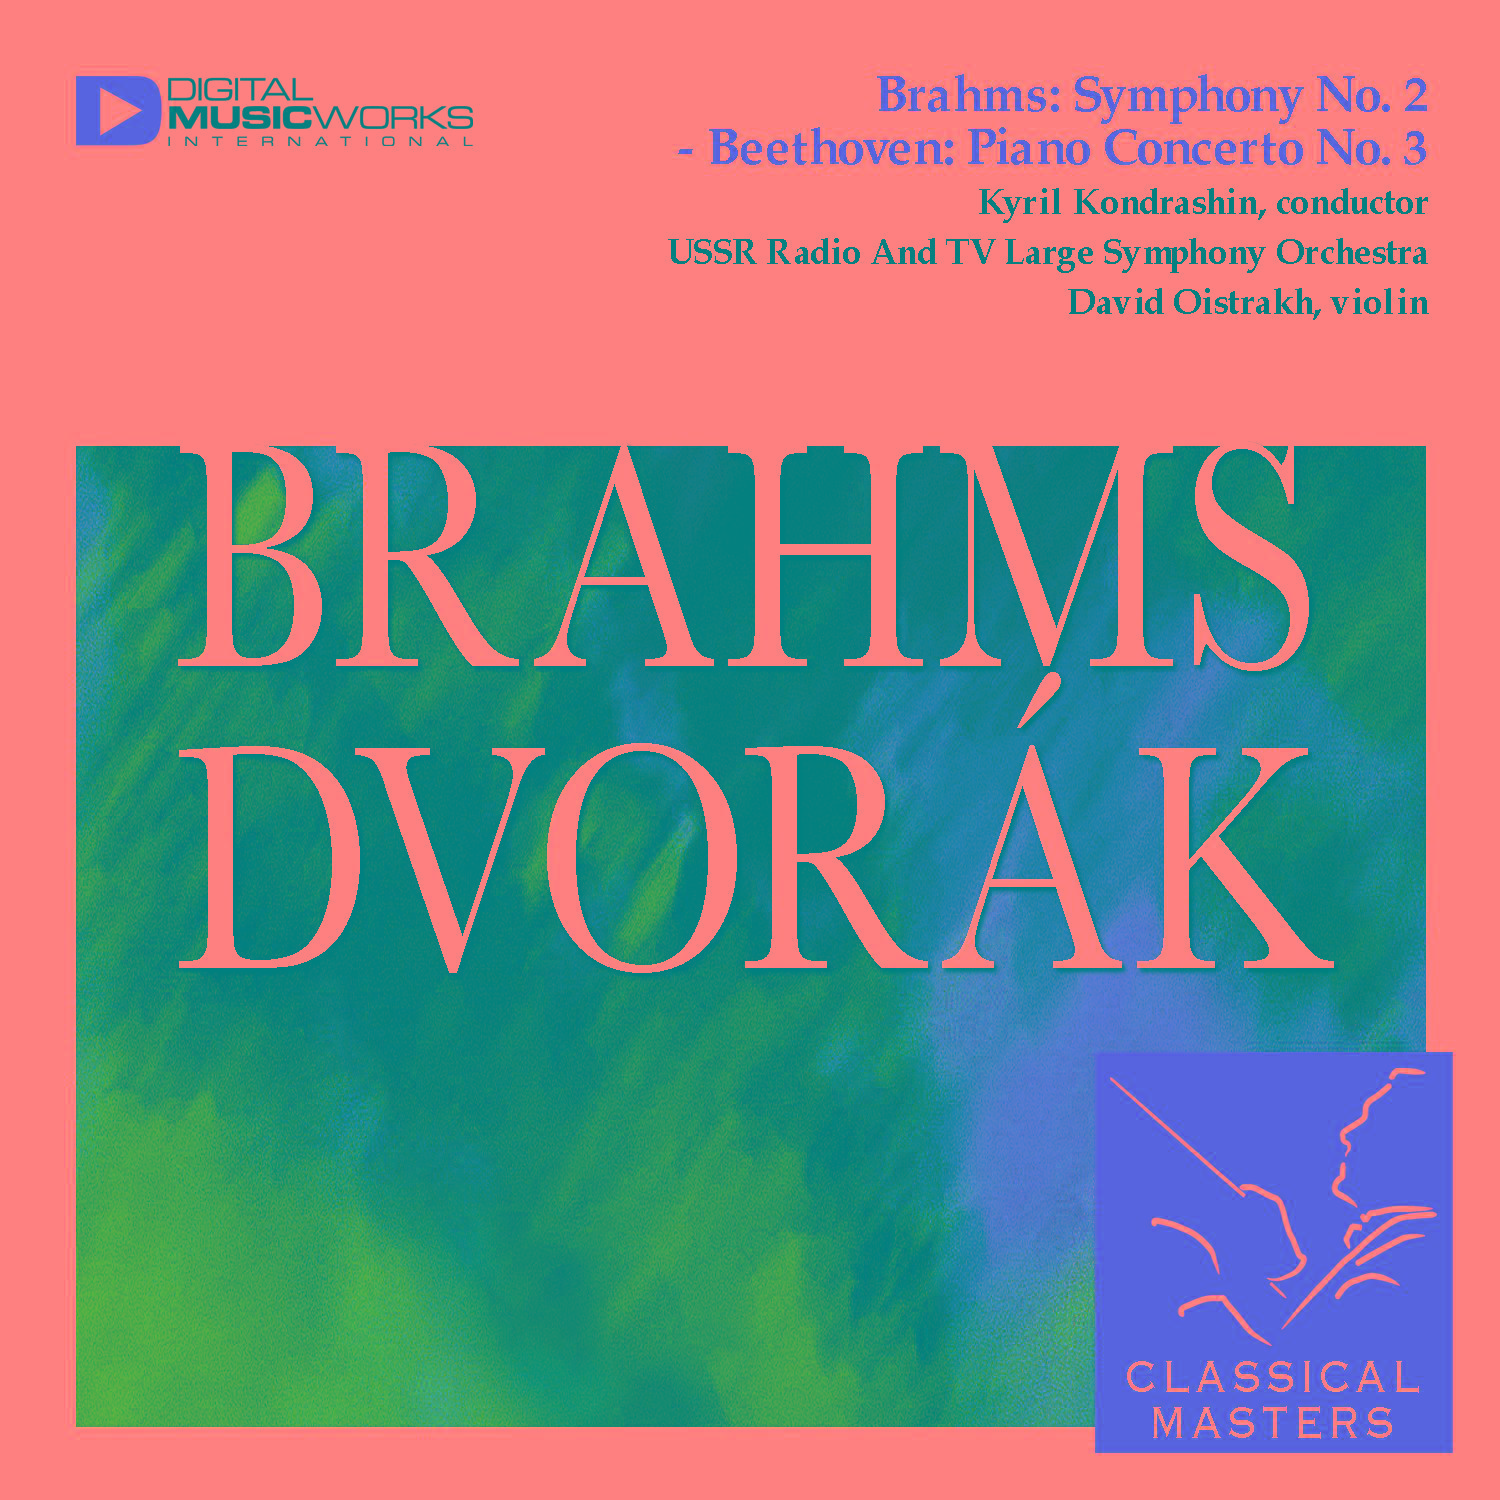 Brahms: Violin Concerto - Dvorák: Violin Concerto